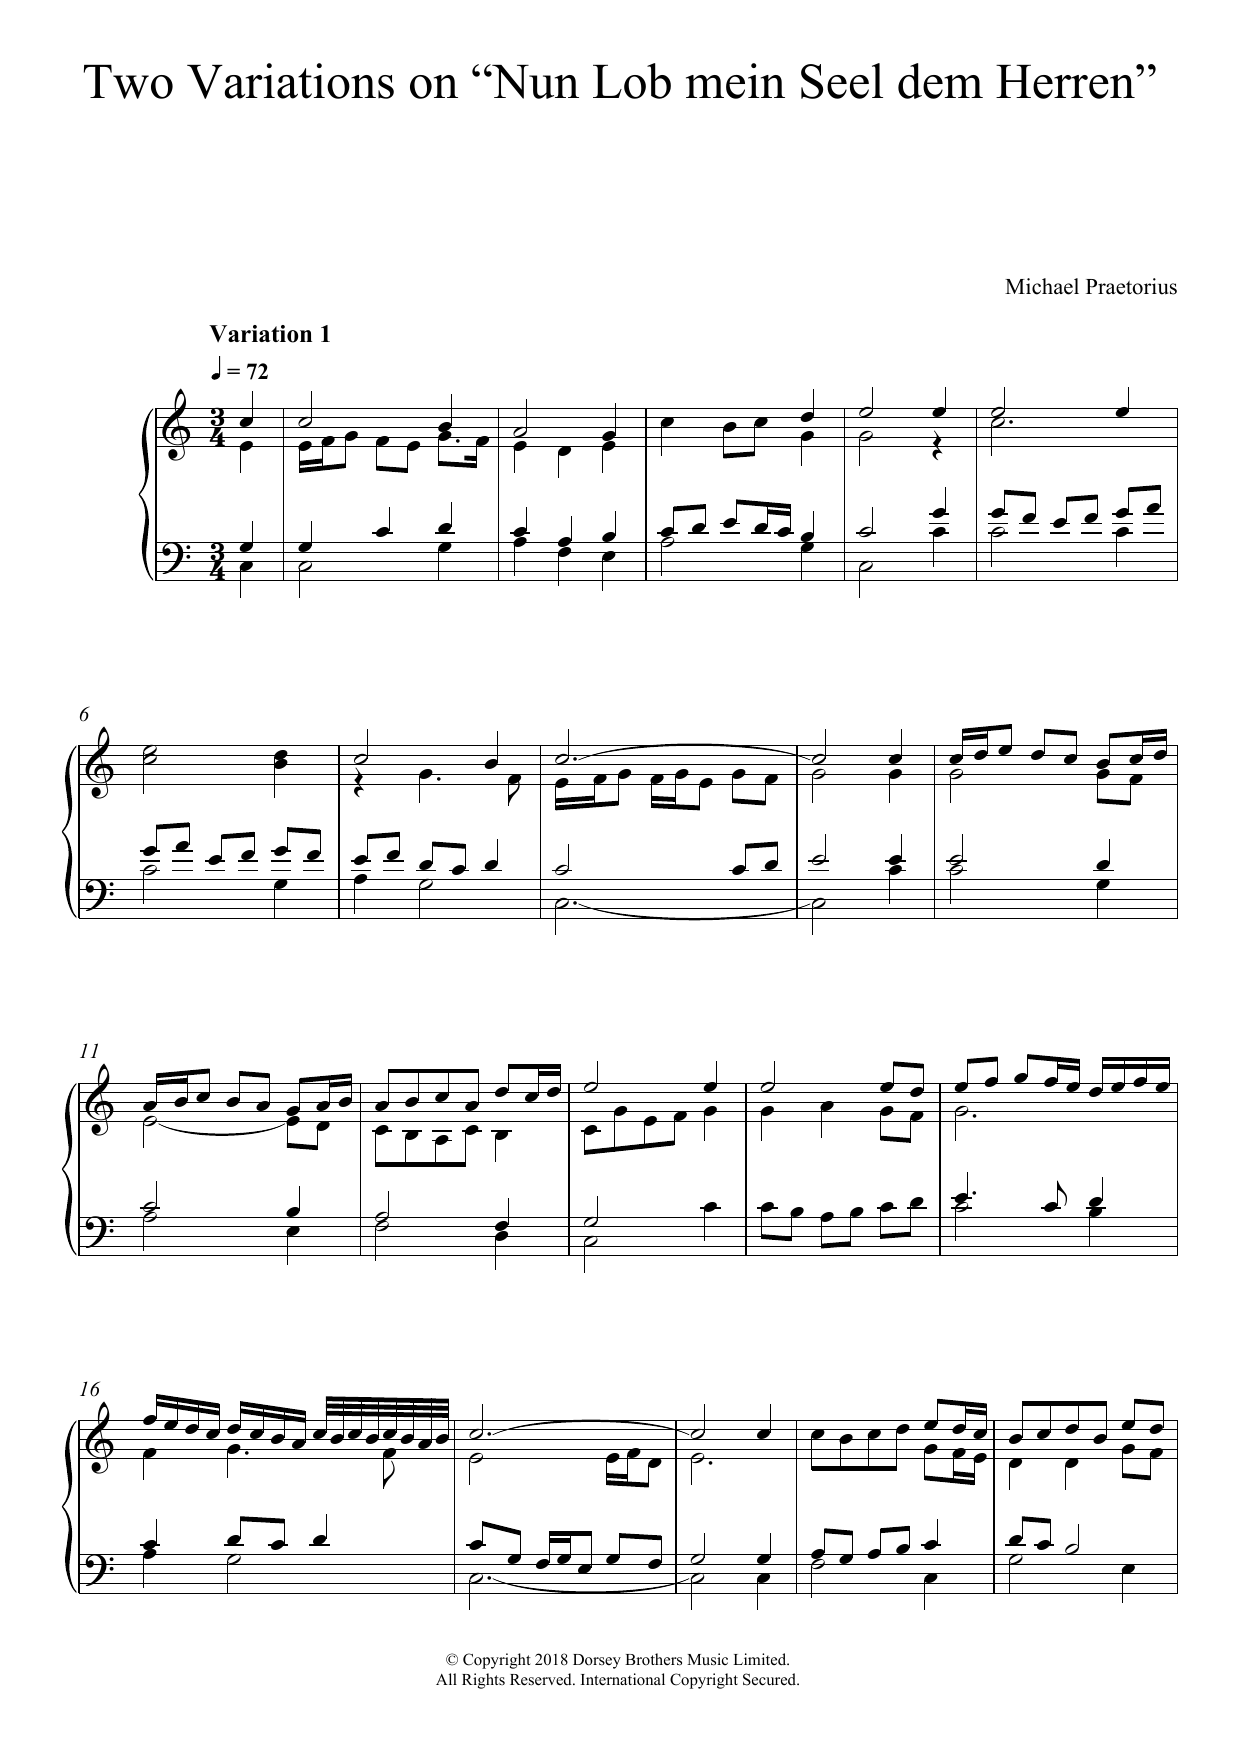 Michael Praetorius Two Variations On 'Nun Lob Mein Seel Dem Herren' Sheet Music Notes & Chords for Piano - Download or Print PDF